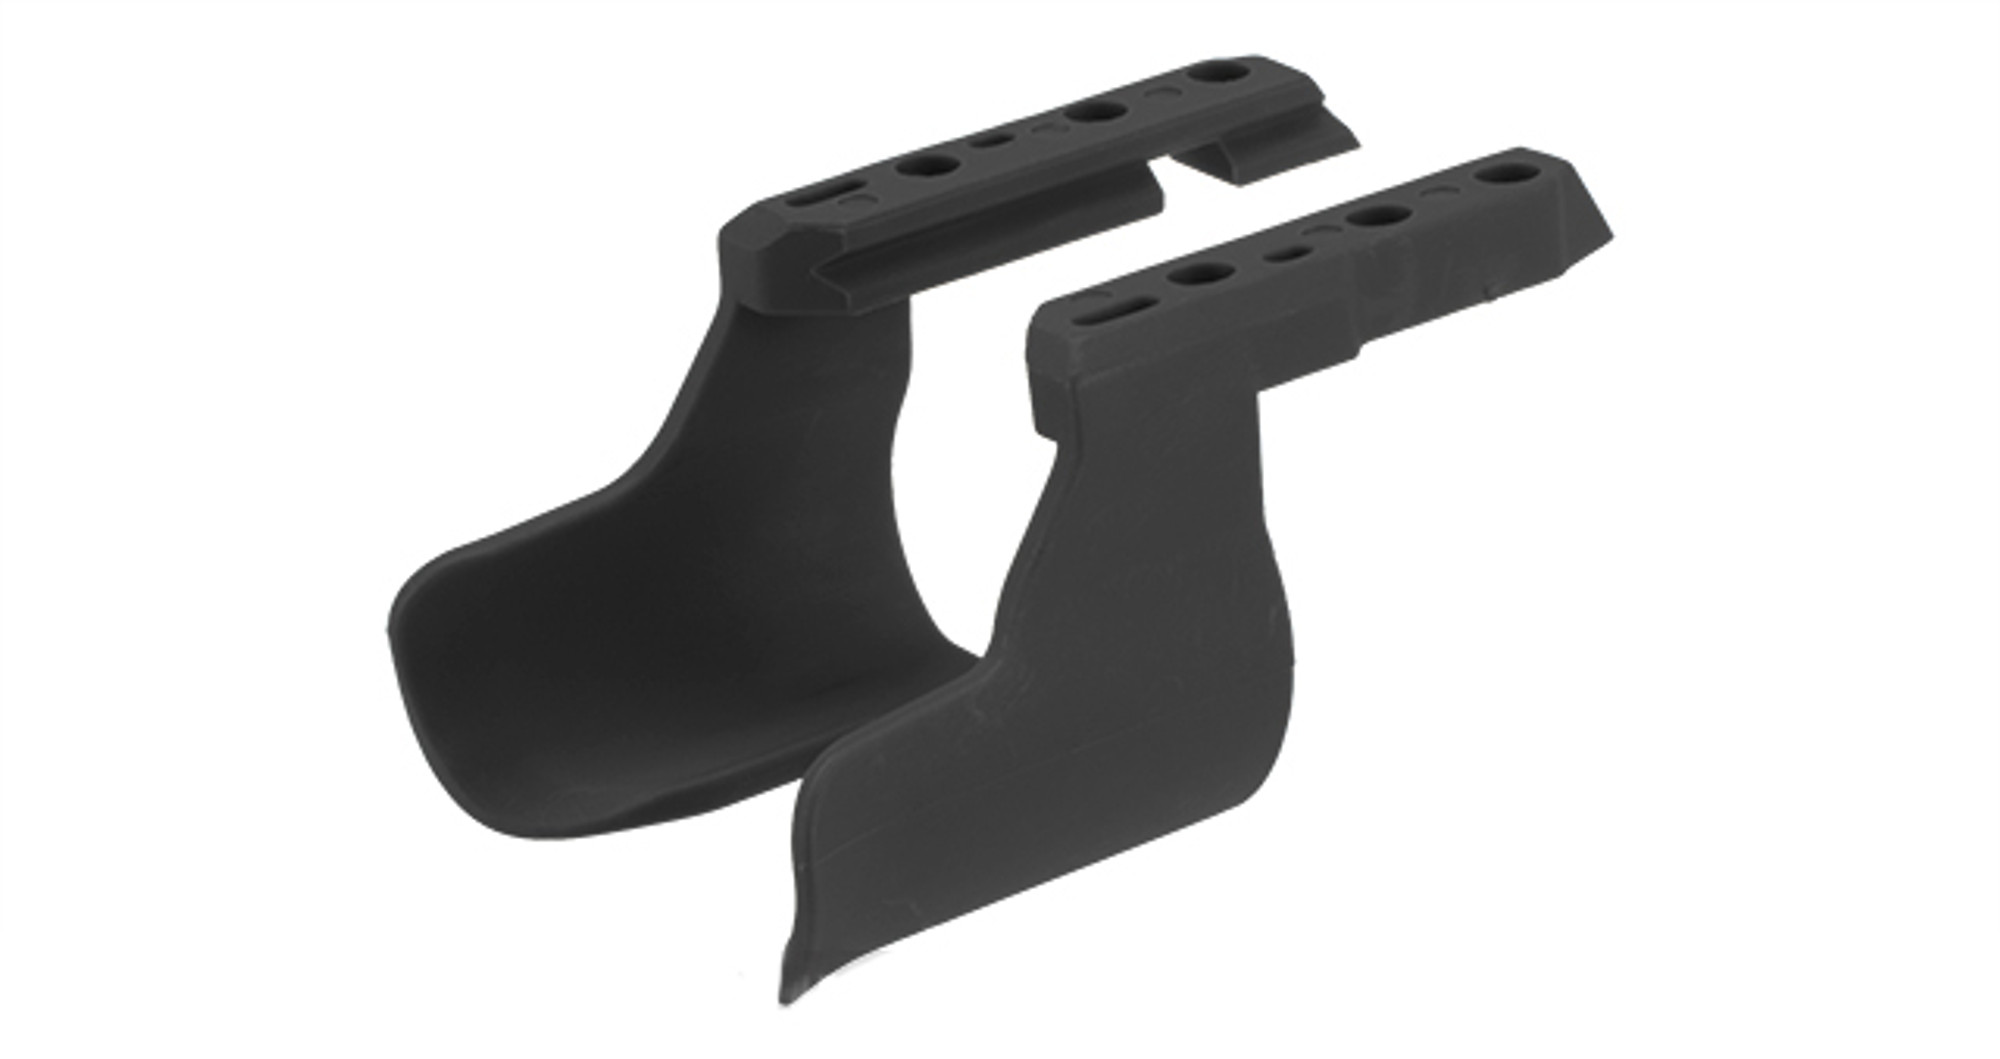 FMA Polymer Frame Rail Kit for Surefire X300 Series Flashlights - Black